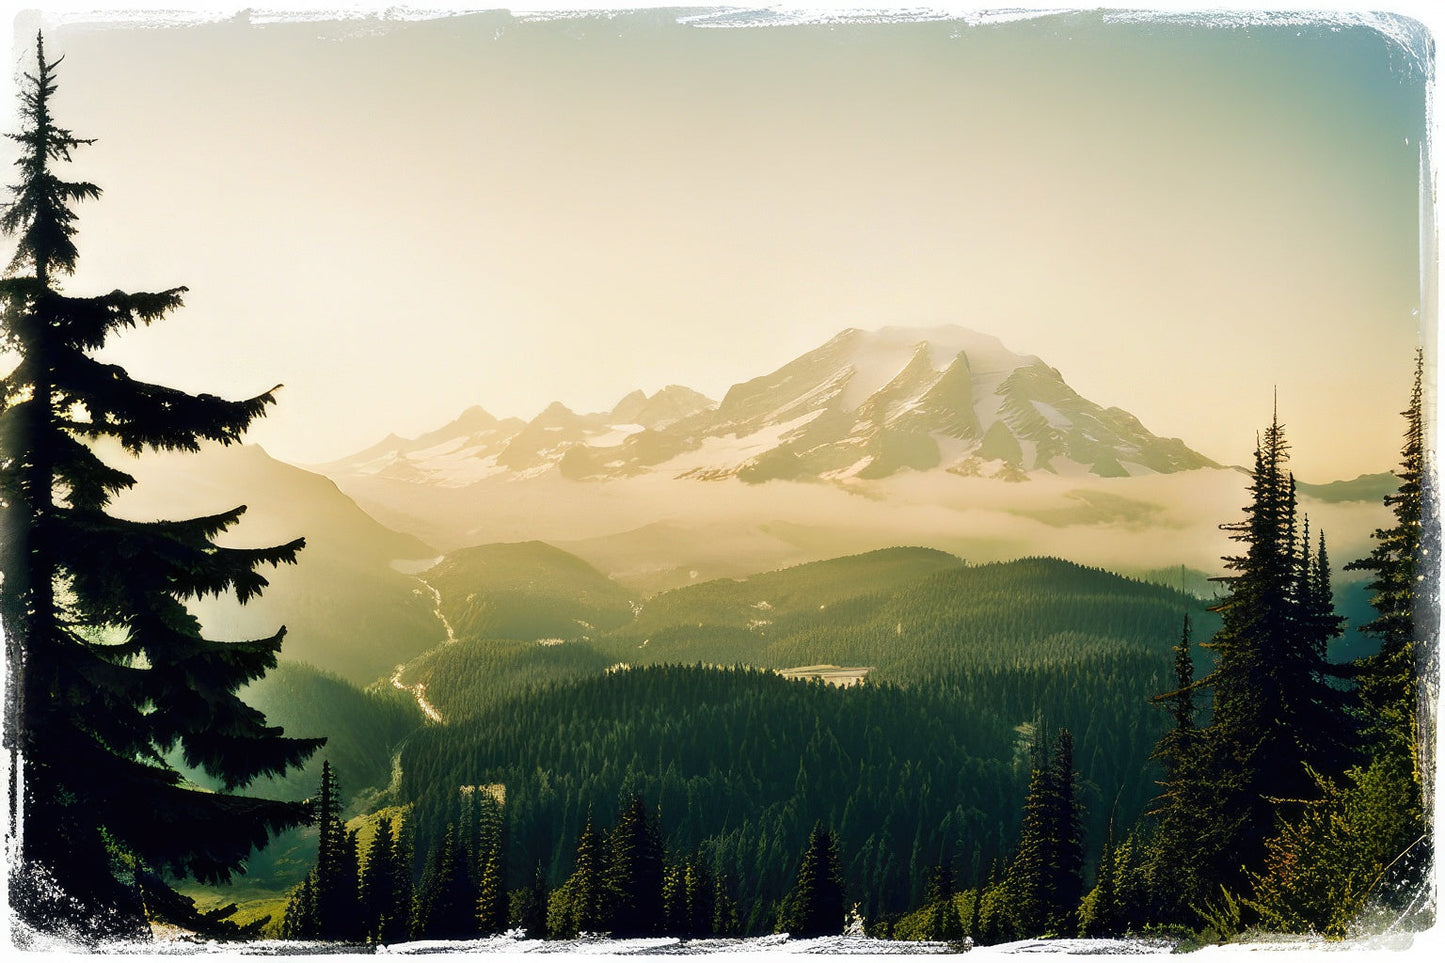 Mount Rainier Scenic Landscape Photo II Art Print